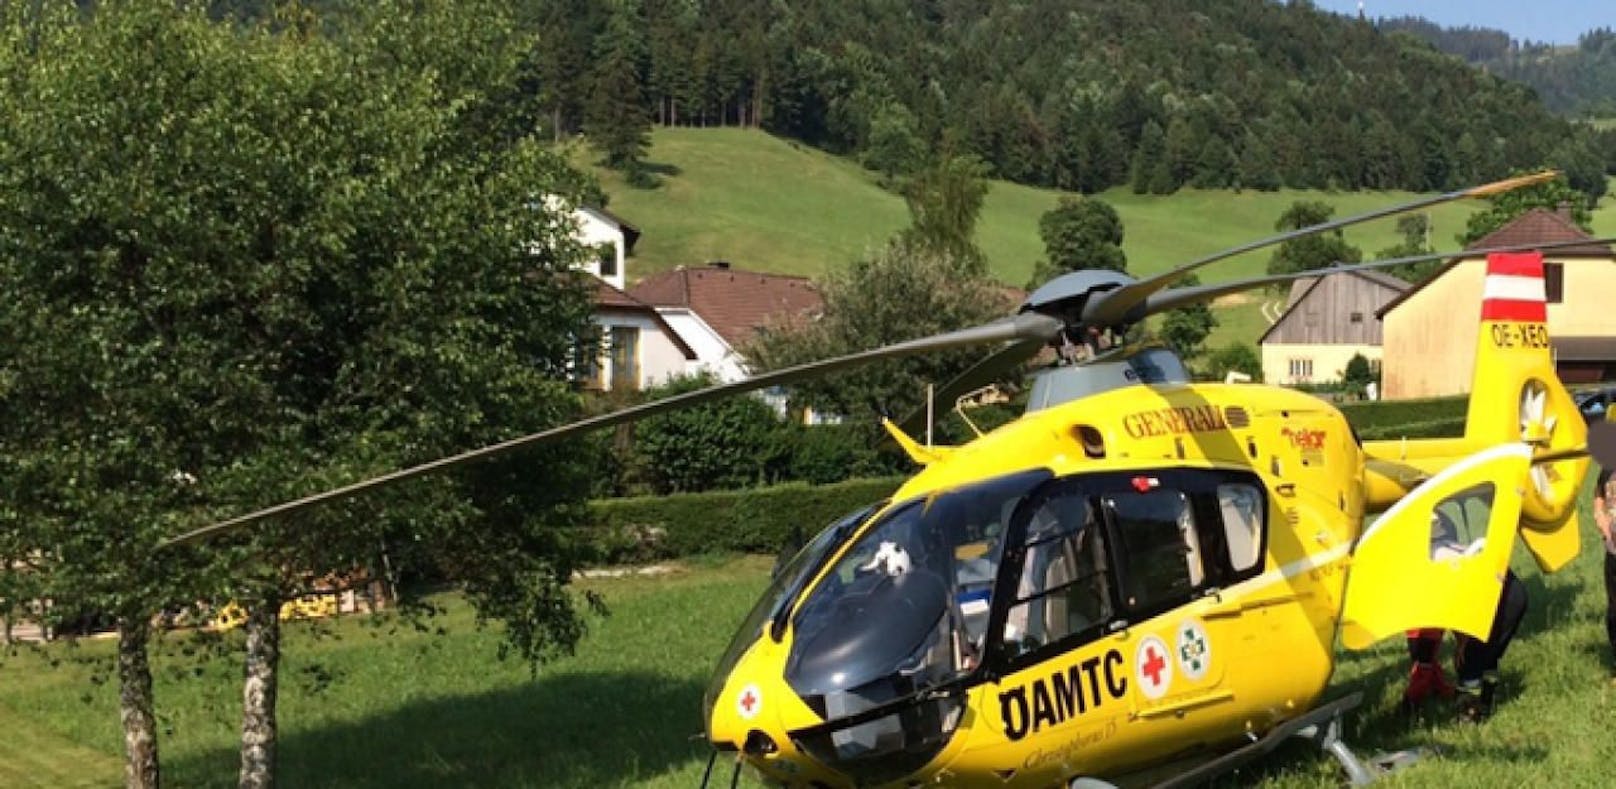 Helikopter landete im Bezirk Amstetten.